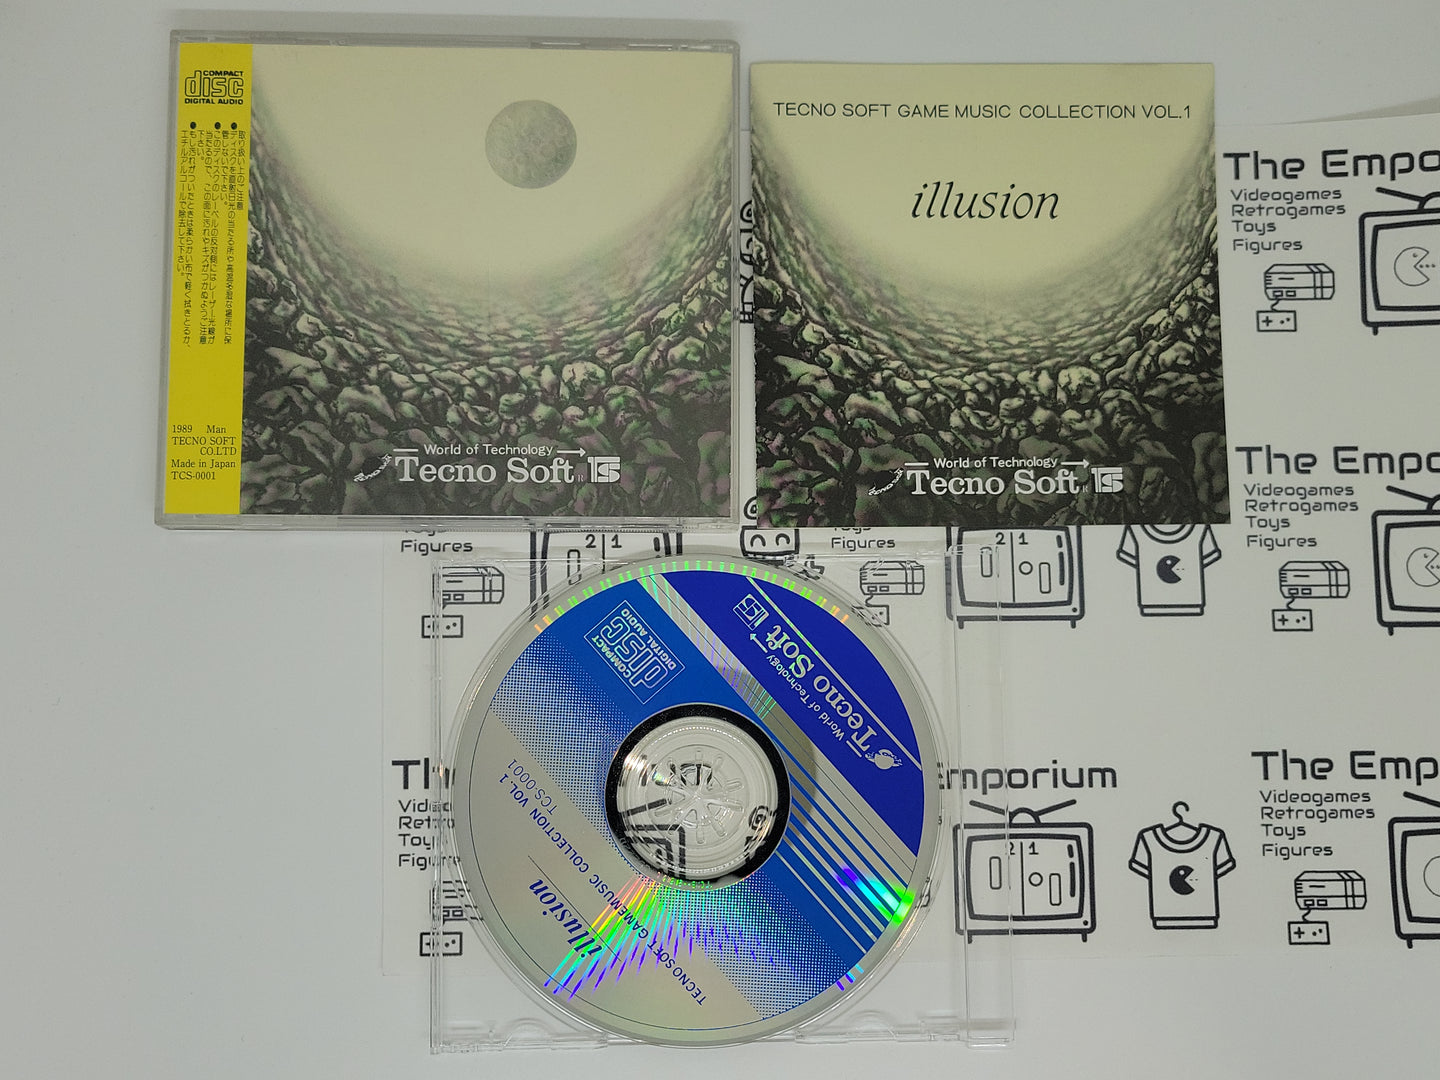 illusion/TECNO SOFT GAME MUSIC COLLECTION VOL.1 - Music cd soundtrack